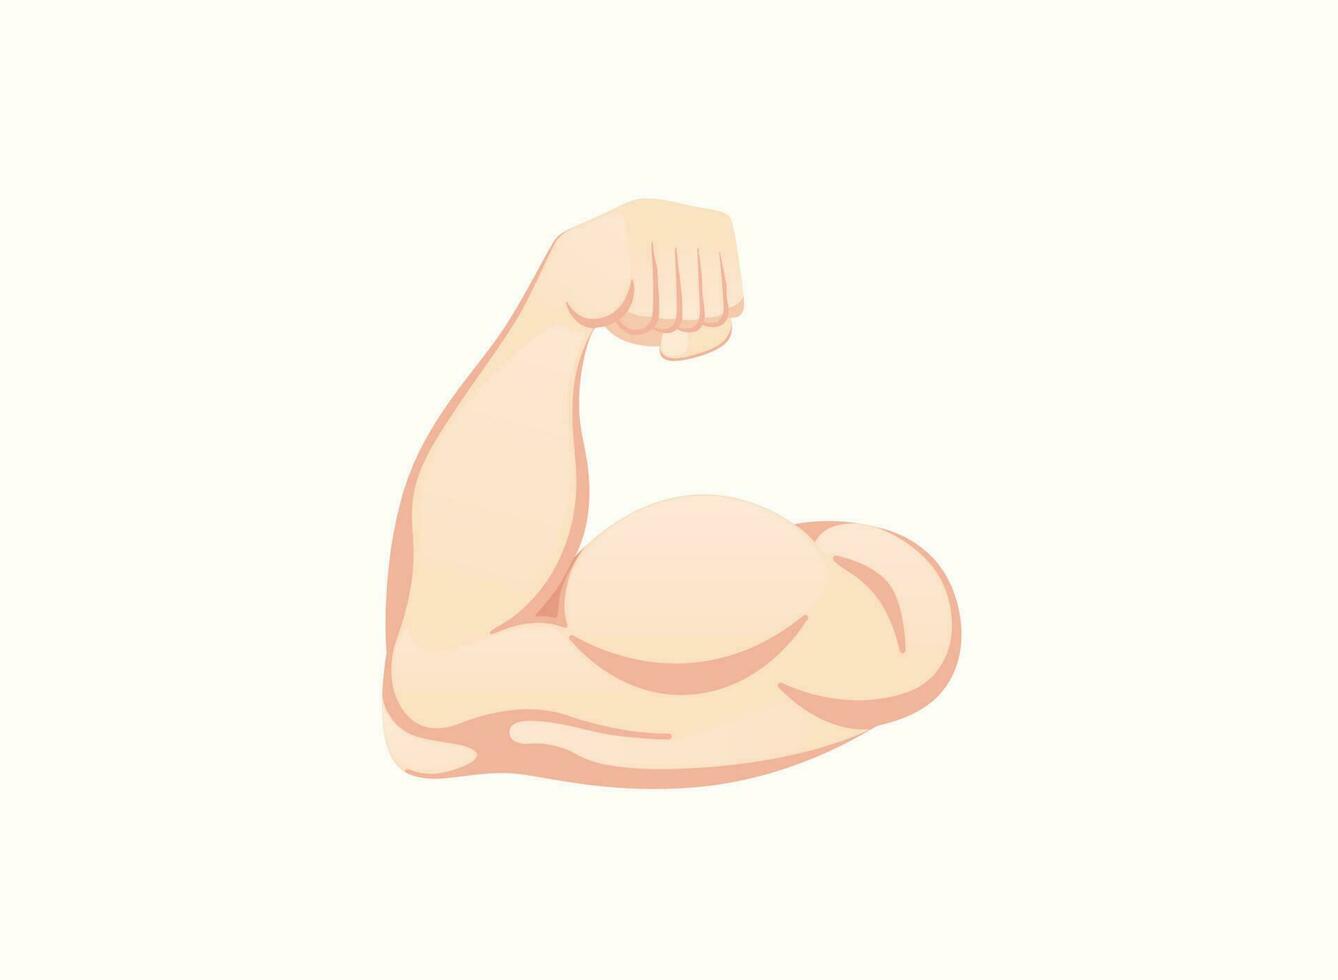 fléchi biceps icône. main geste emoji vecteur illustration